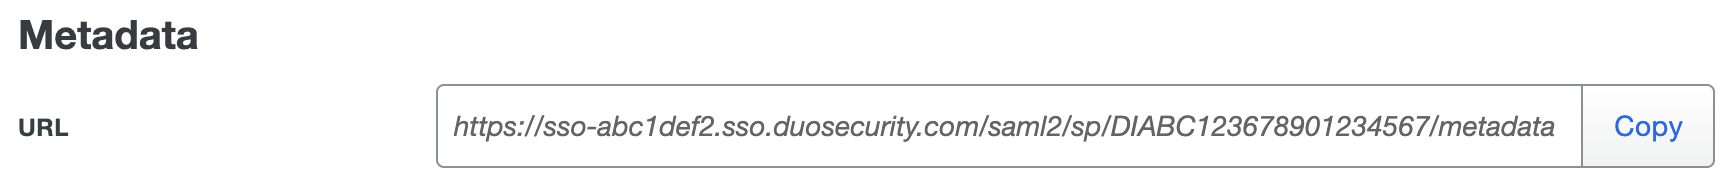 Duo NinjaOne Metadata URL